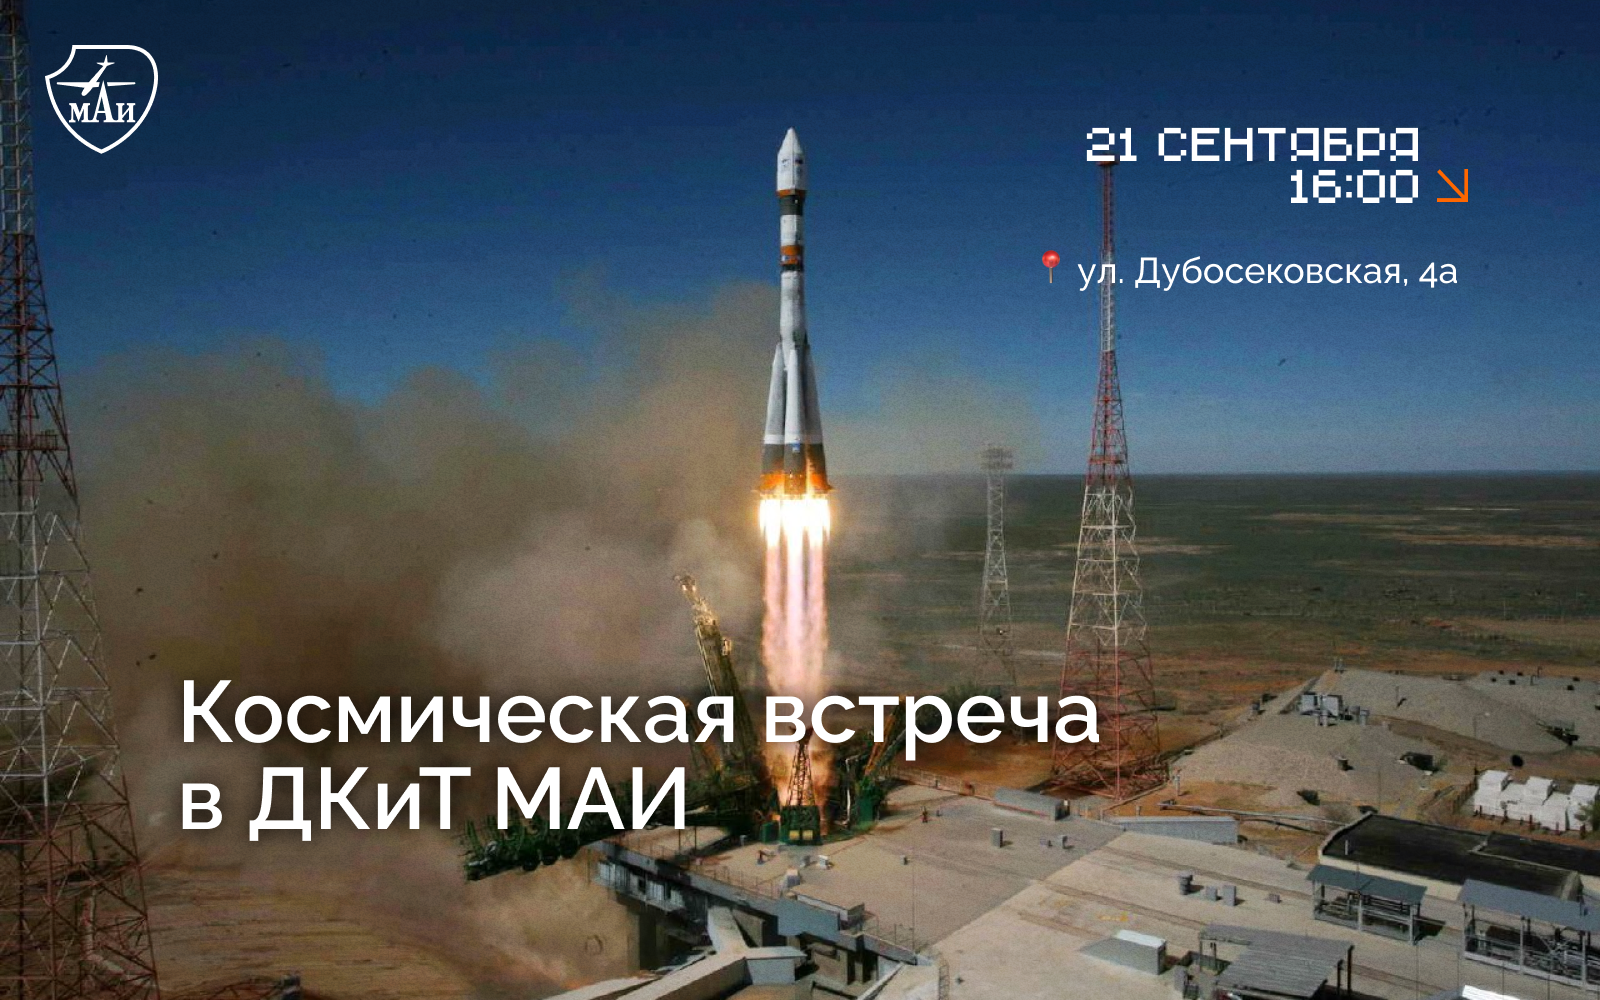 Трансляция в ДКиТ: ракета с логотипом МАИ доставит экипаж с маёвцем на МКС